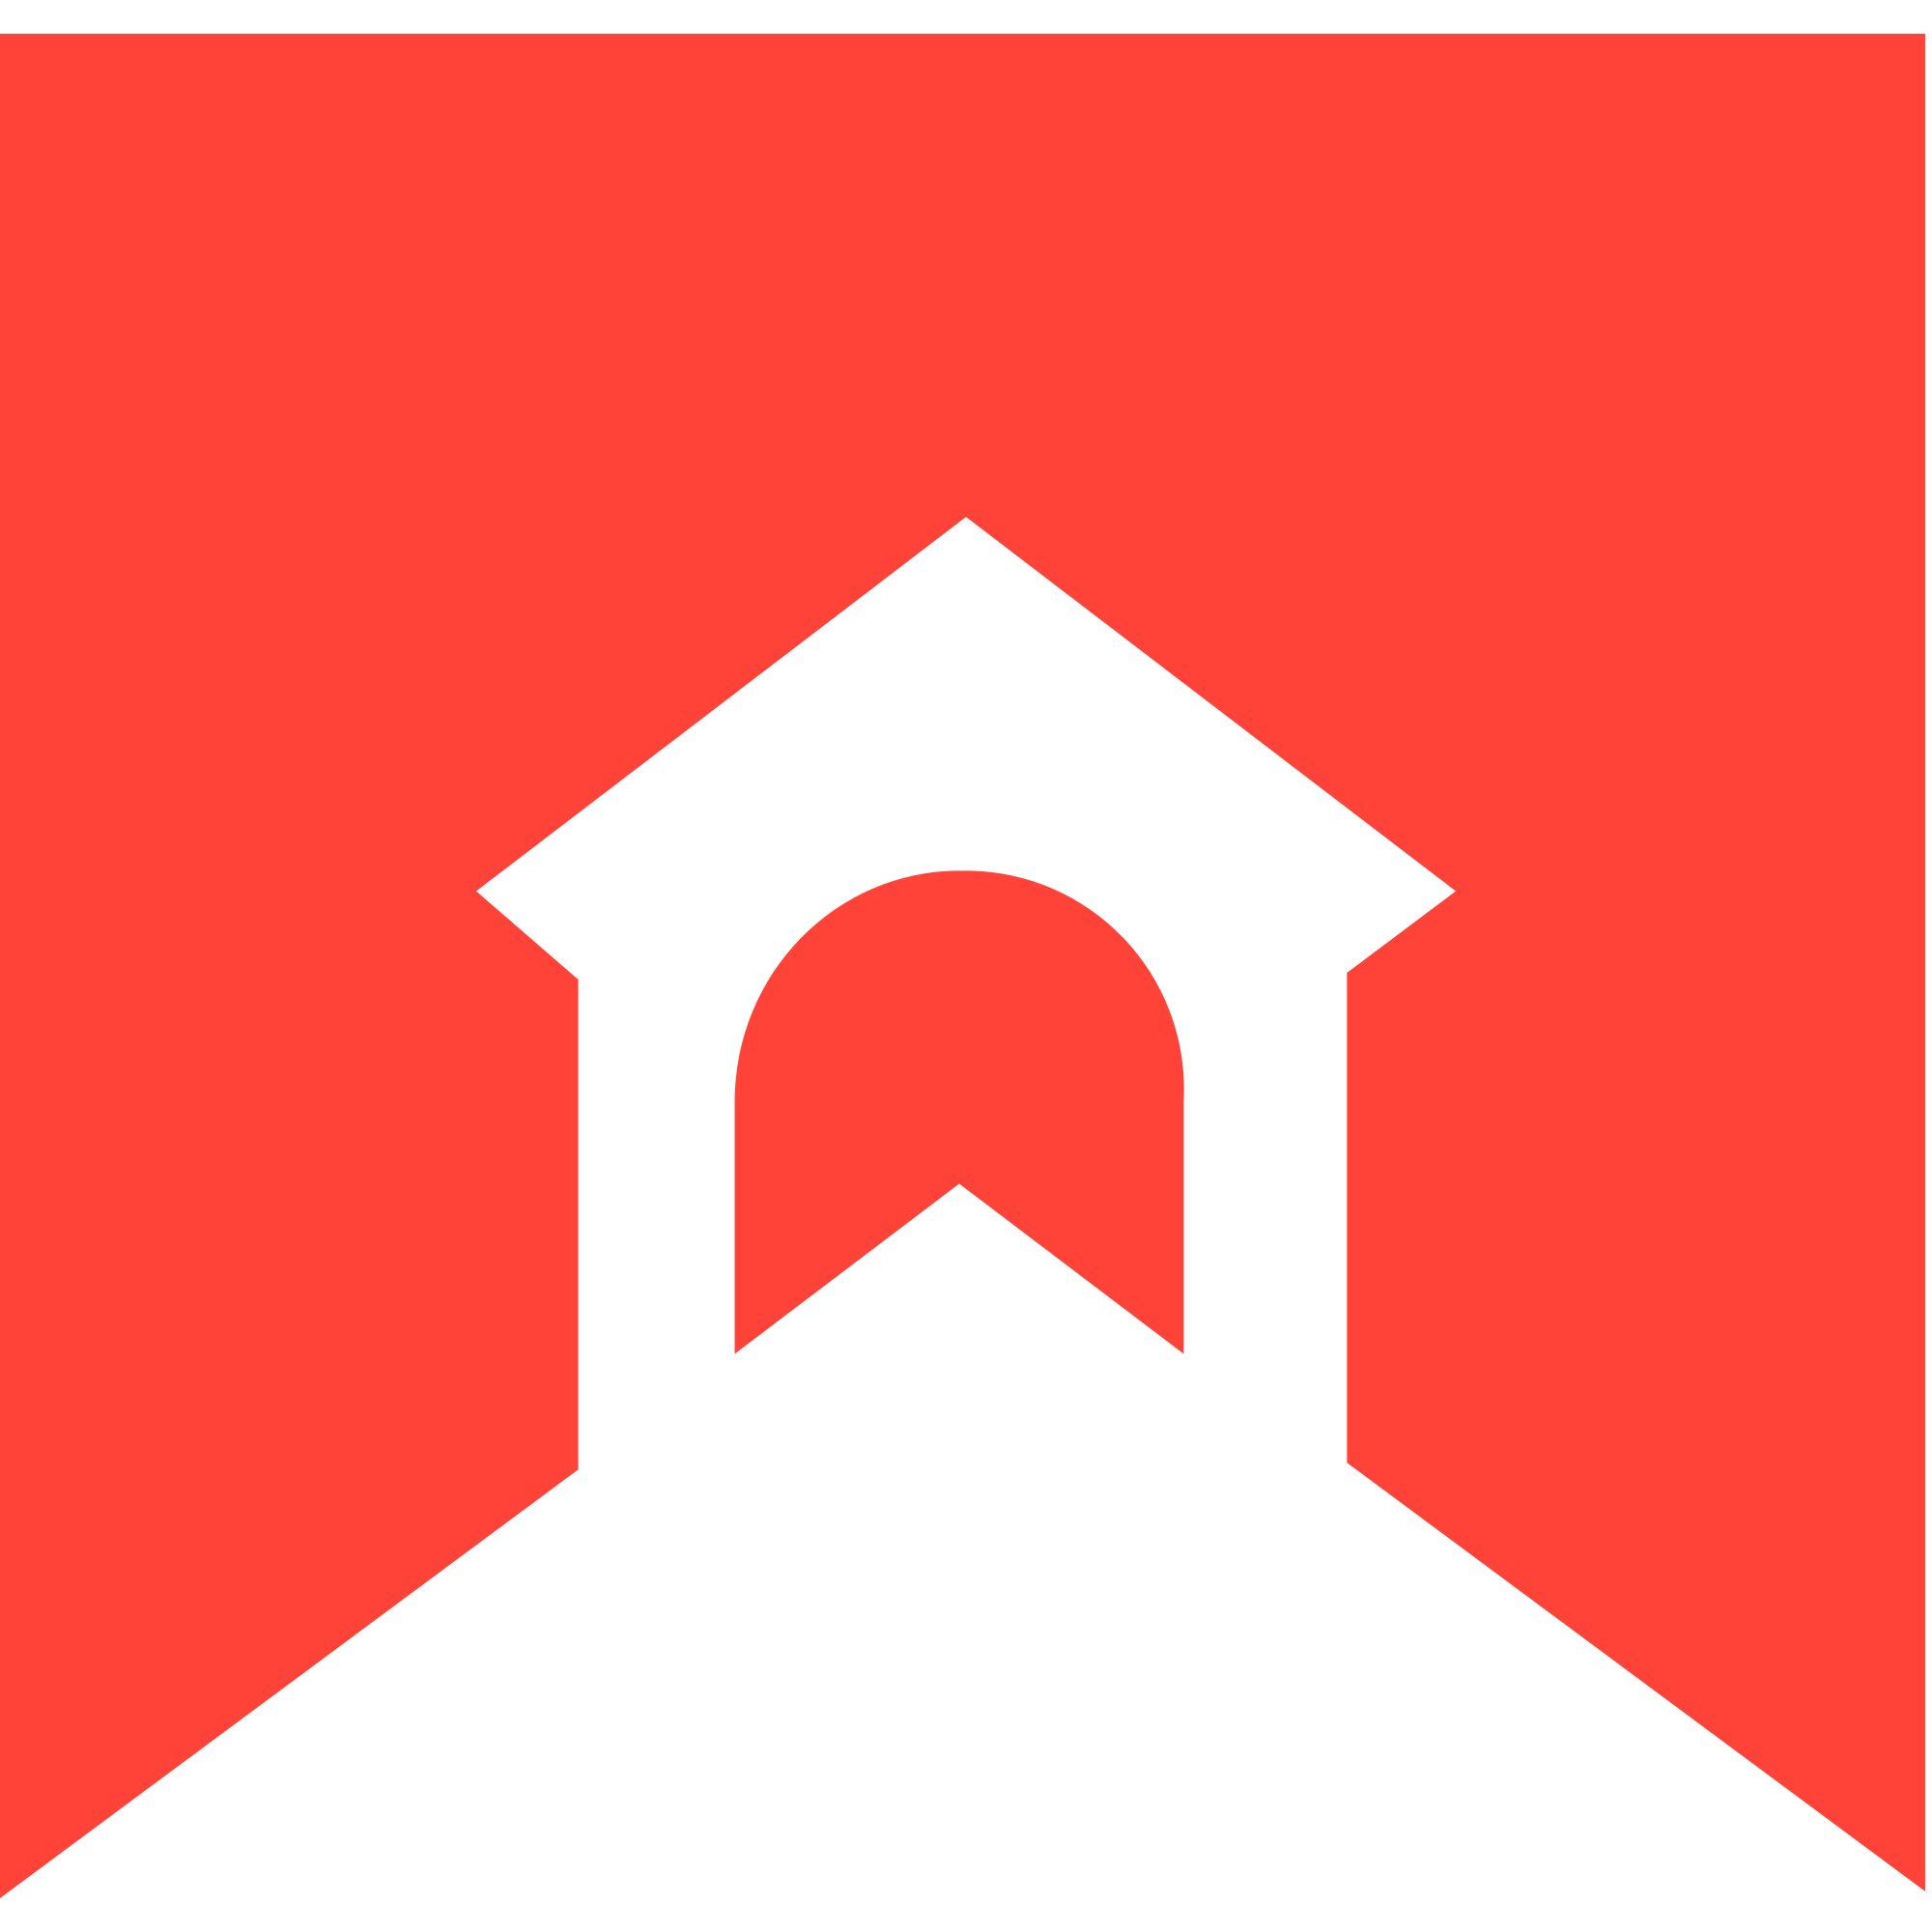 BarnBridge (BOND) Logo .SVG and .PNG Files Download